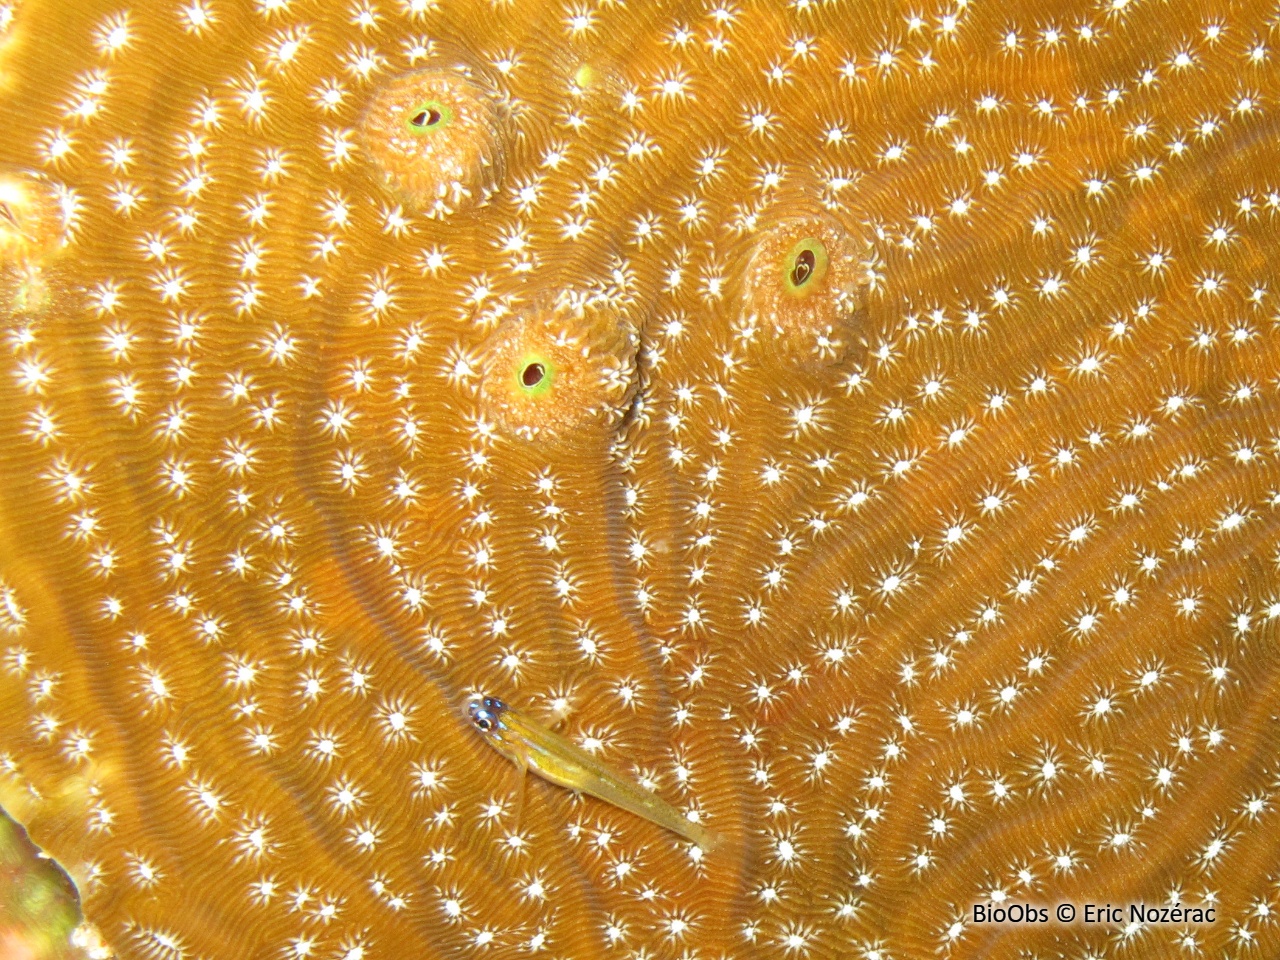 Balane des coraux agaricia - Megatrema madreporarum - Eric Nozérac - BioObs